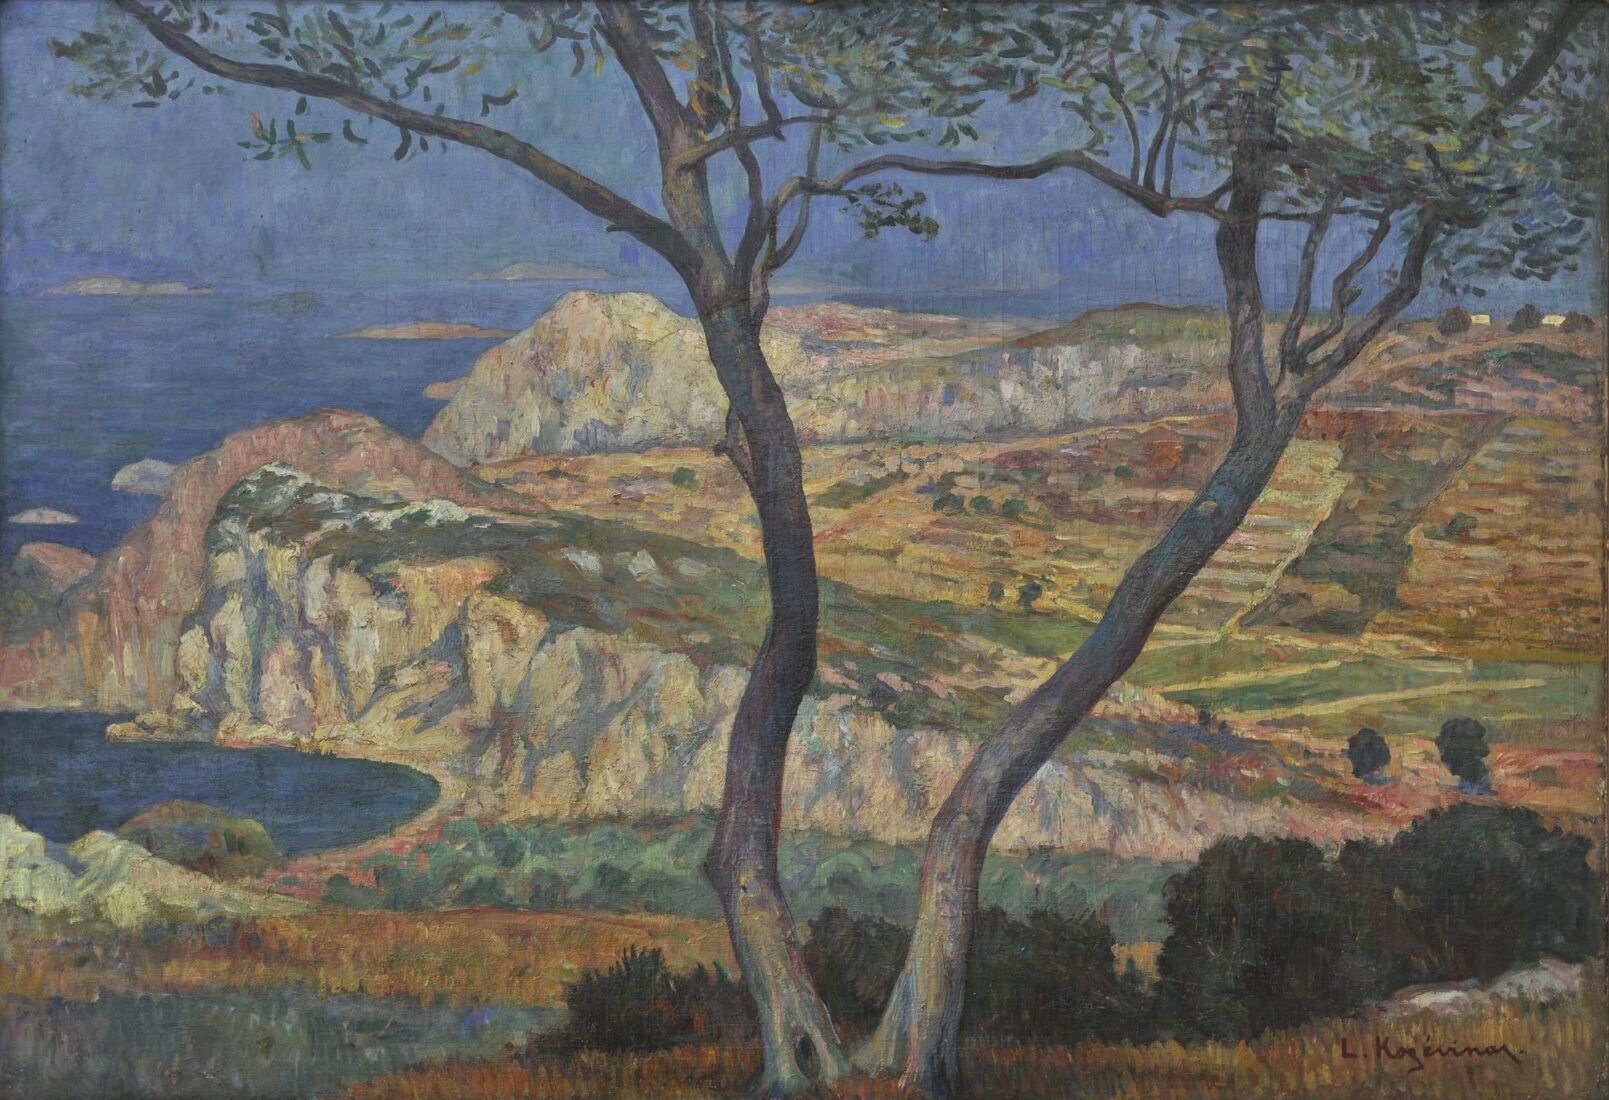 Landscape from Corfu